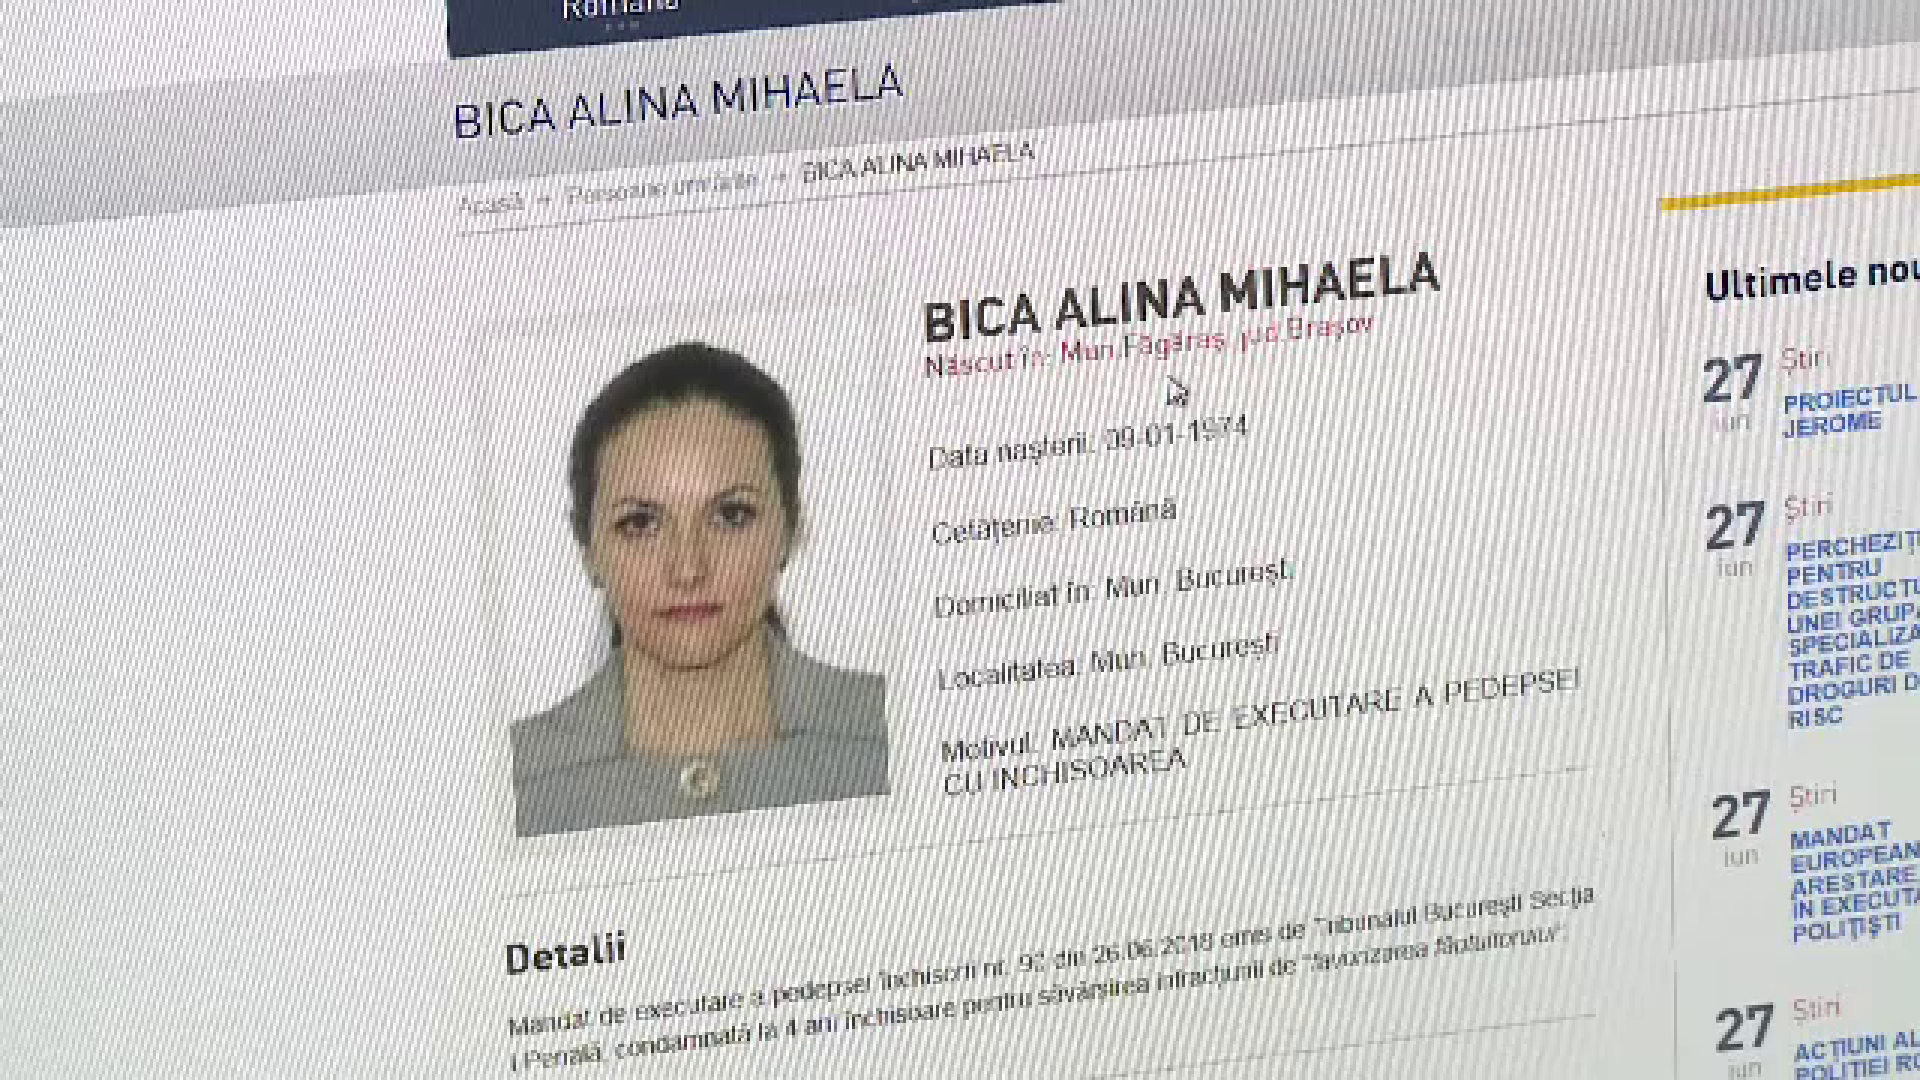 Alina Bica